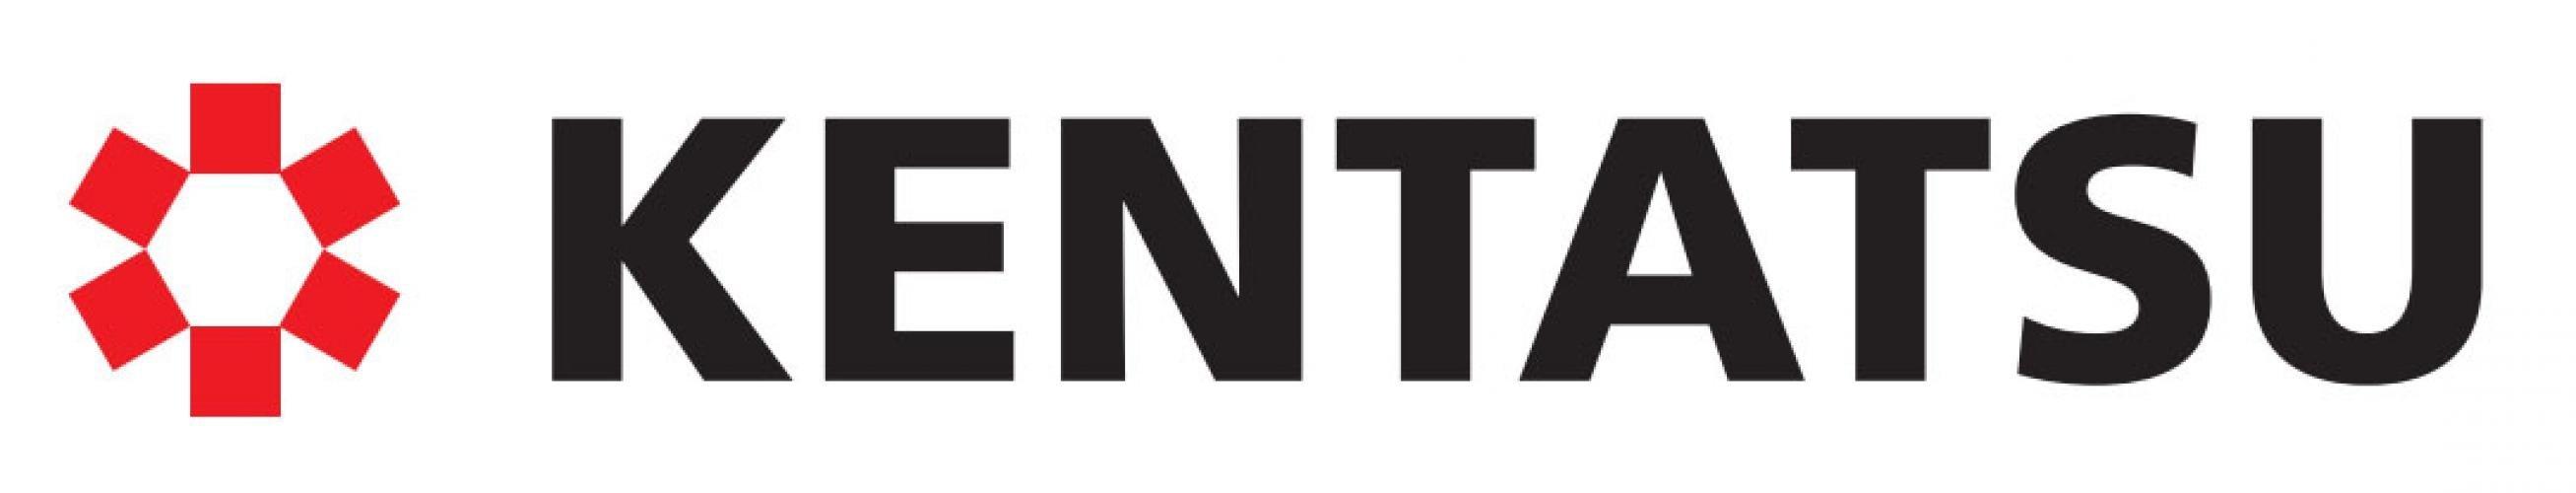 kentatsu логотип